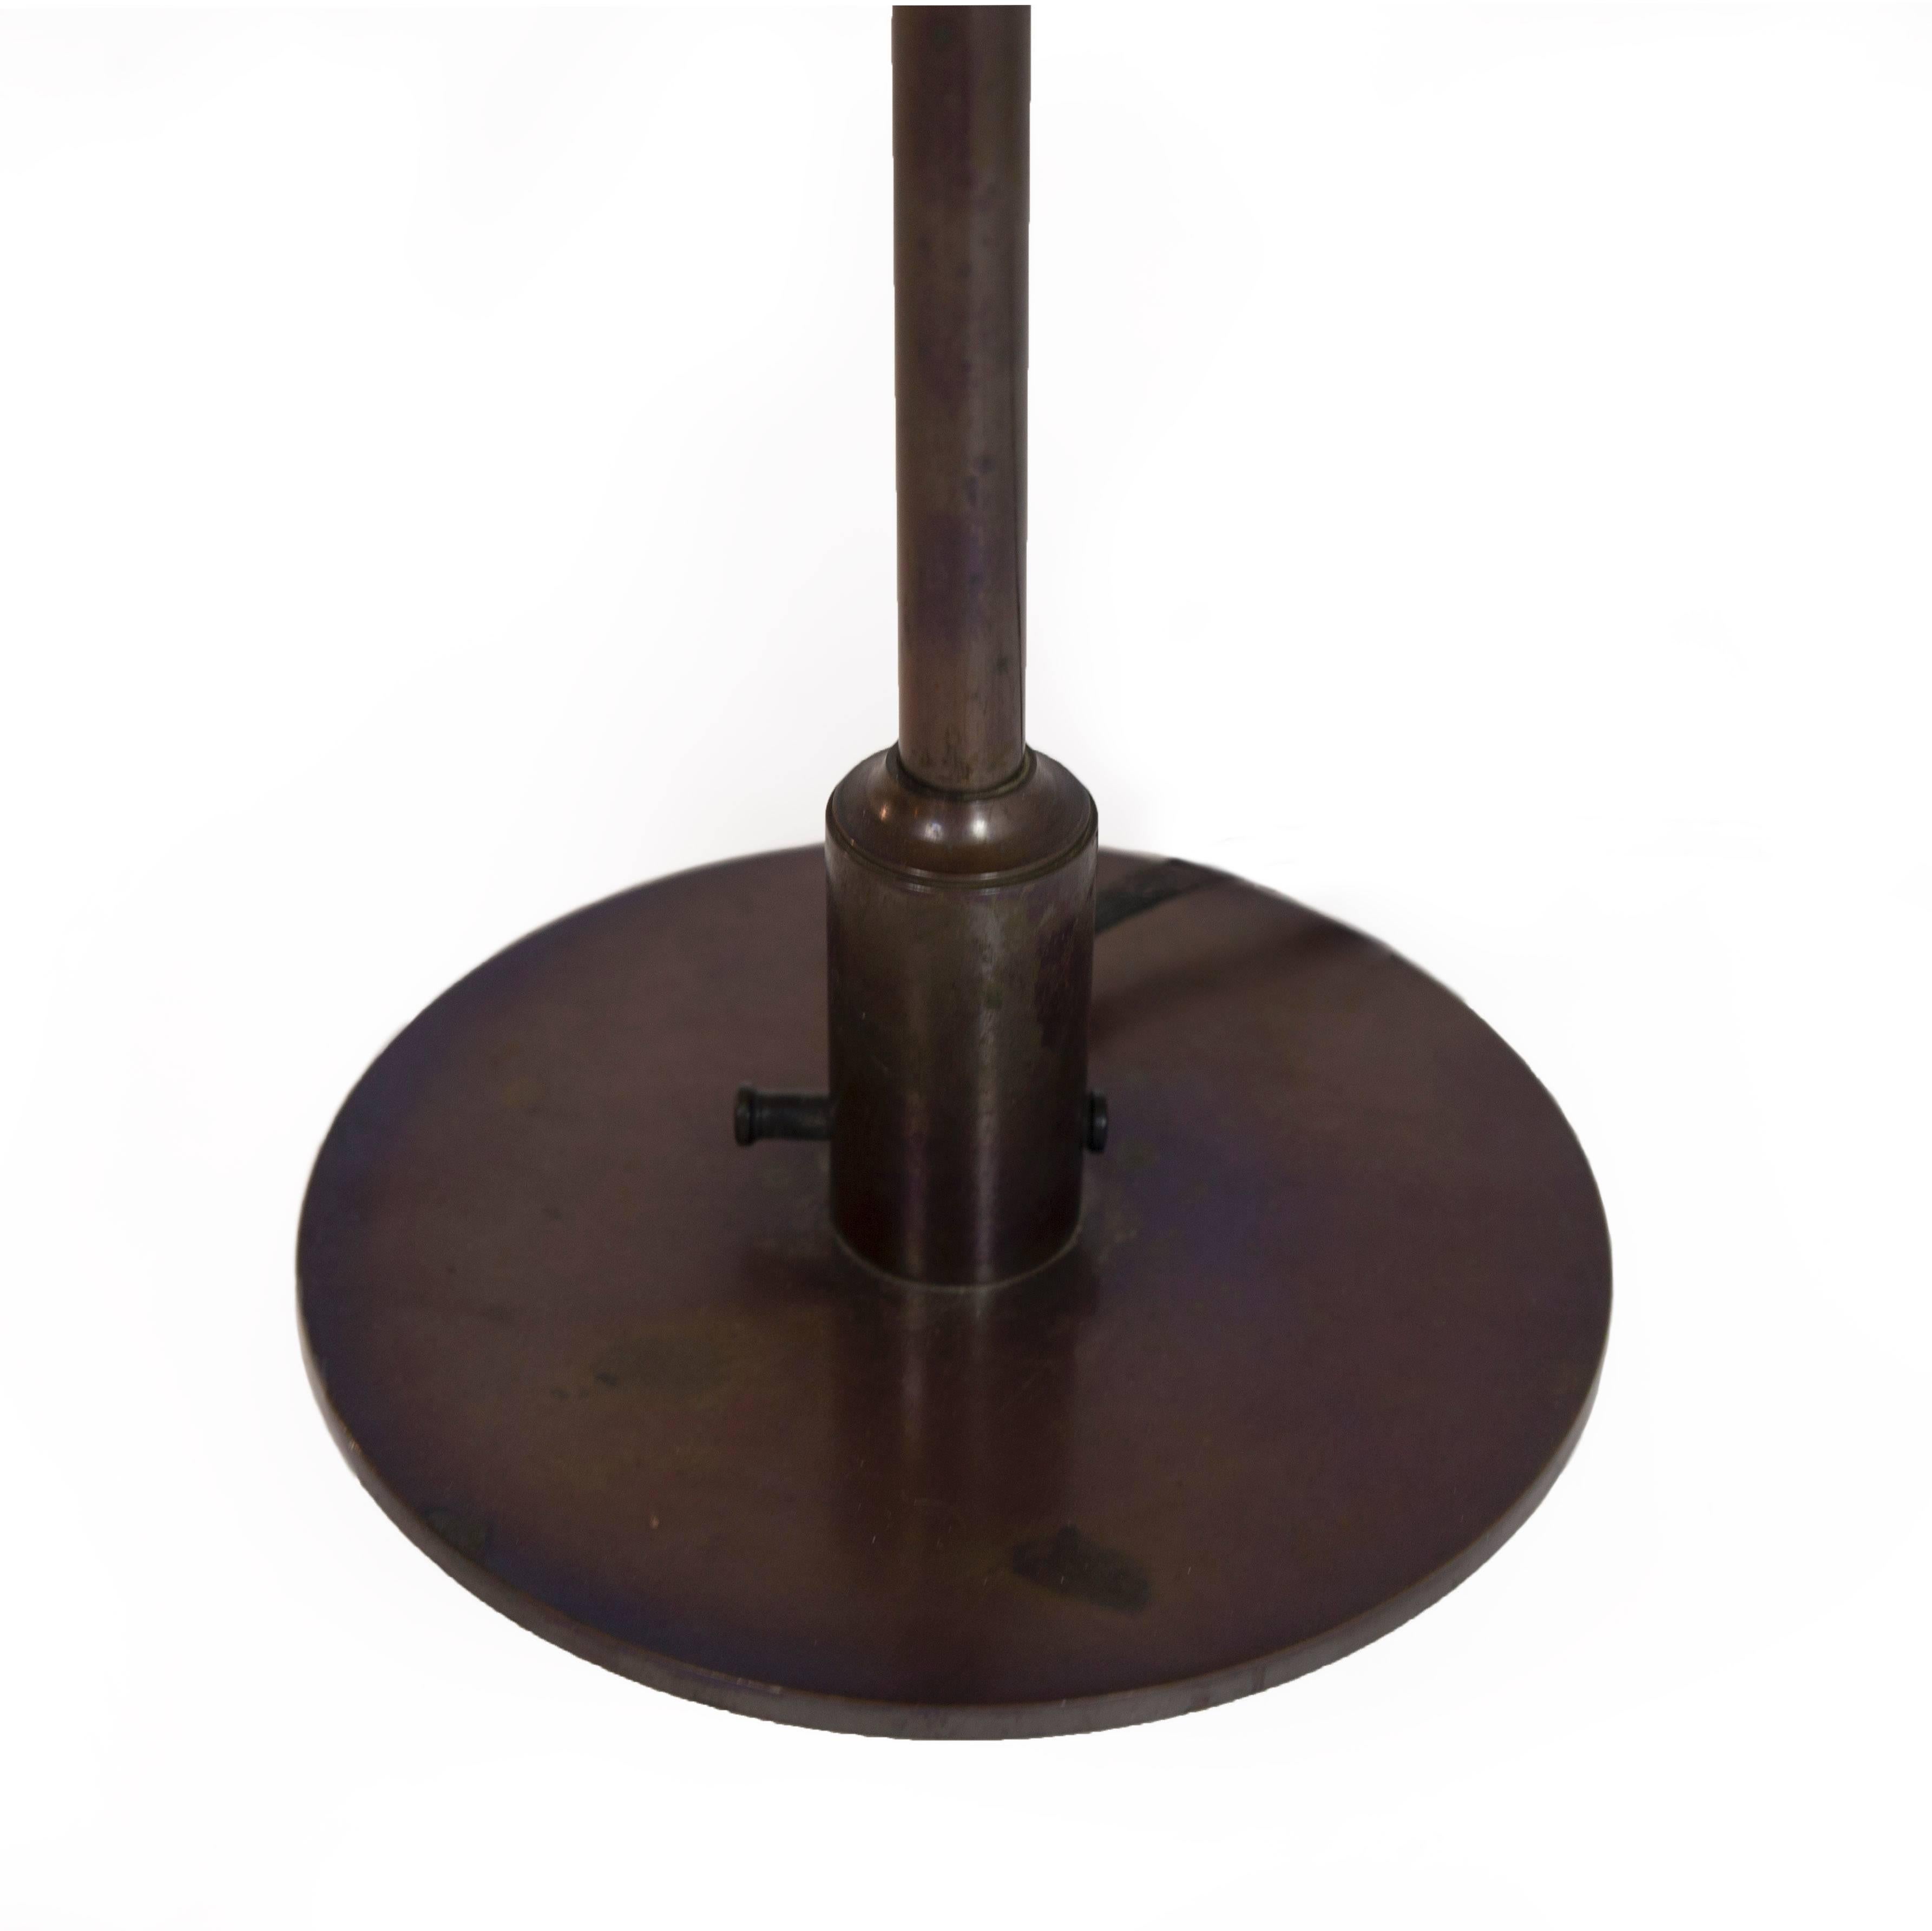 Danish Poul Henningsen PH 4/3 Table Lamp, Patented